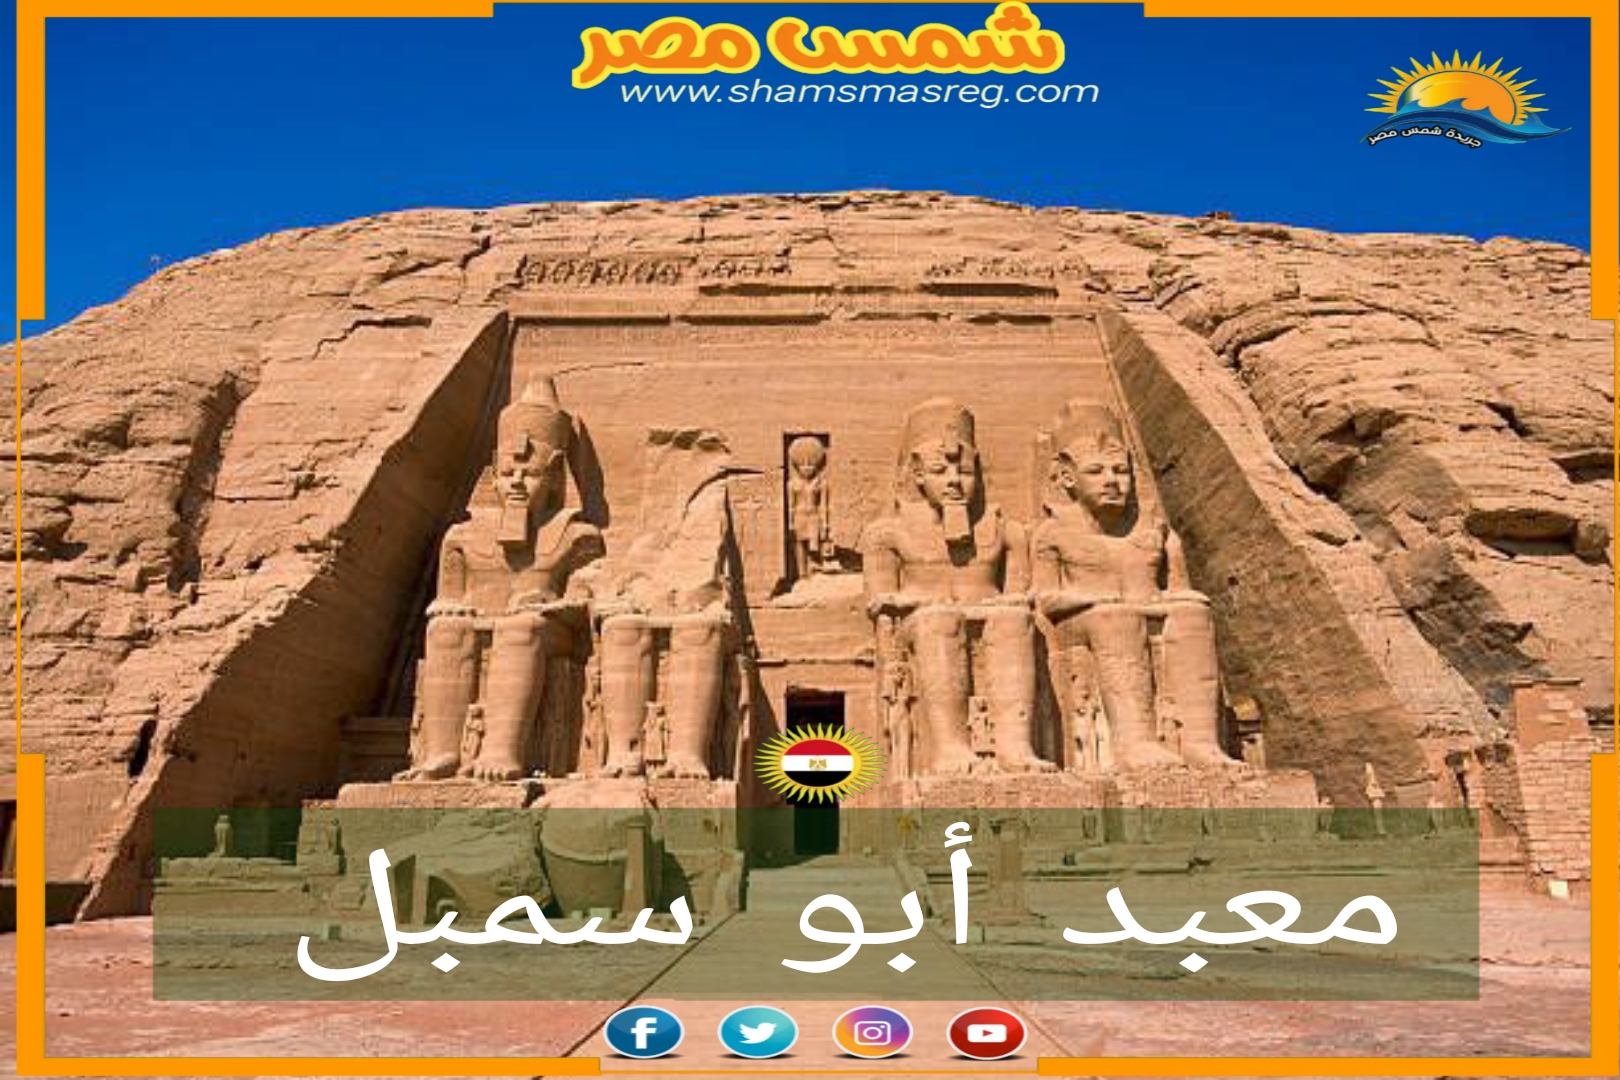 شمس مصر/ معبد أبو سمبل 